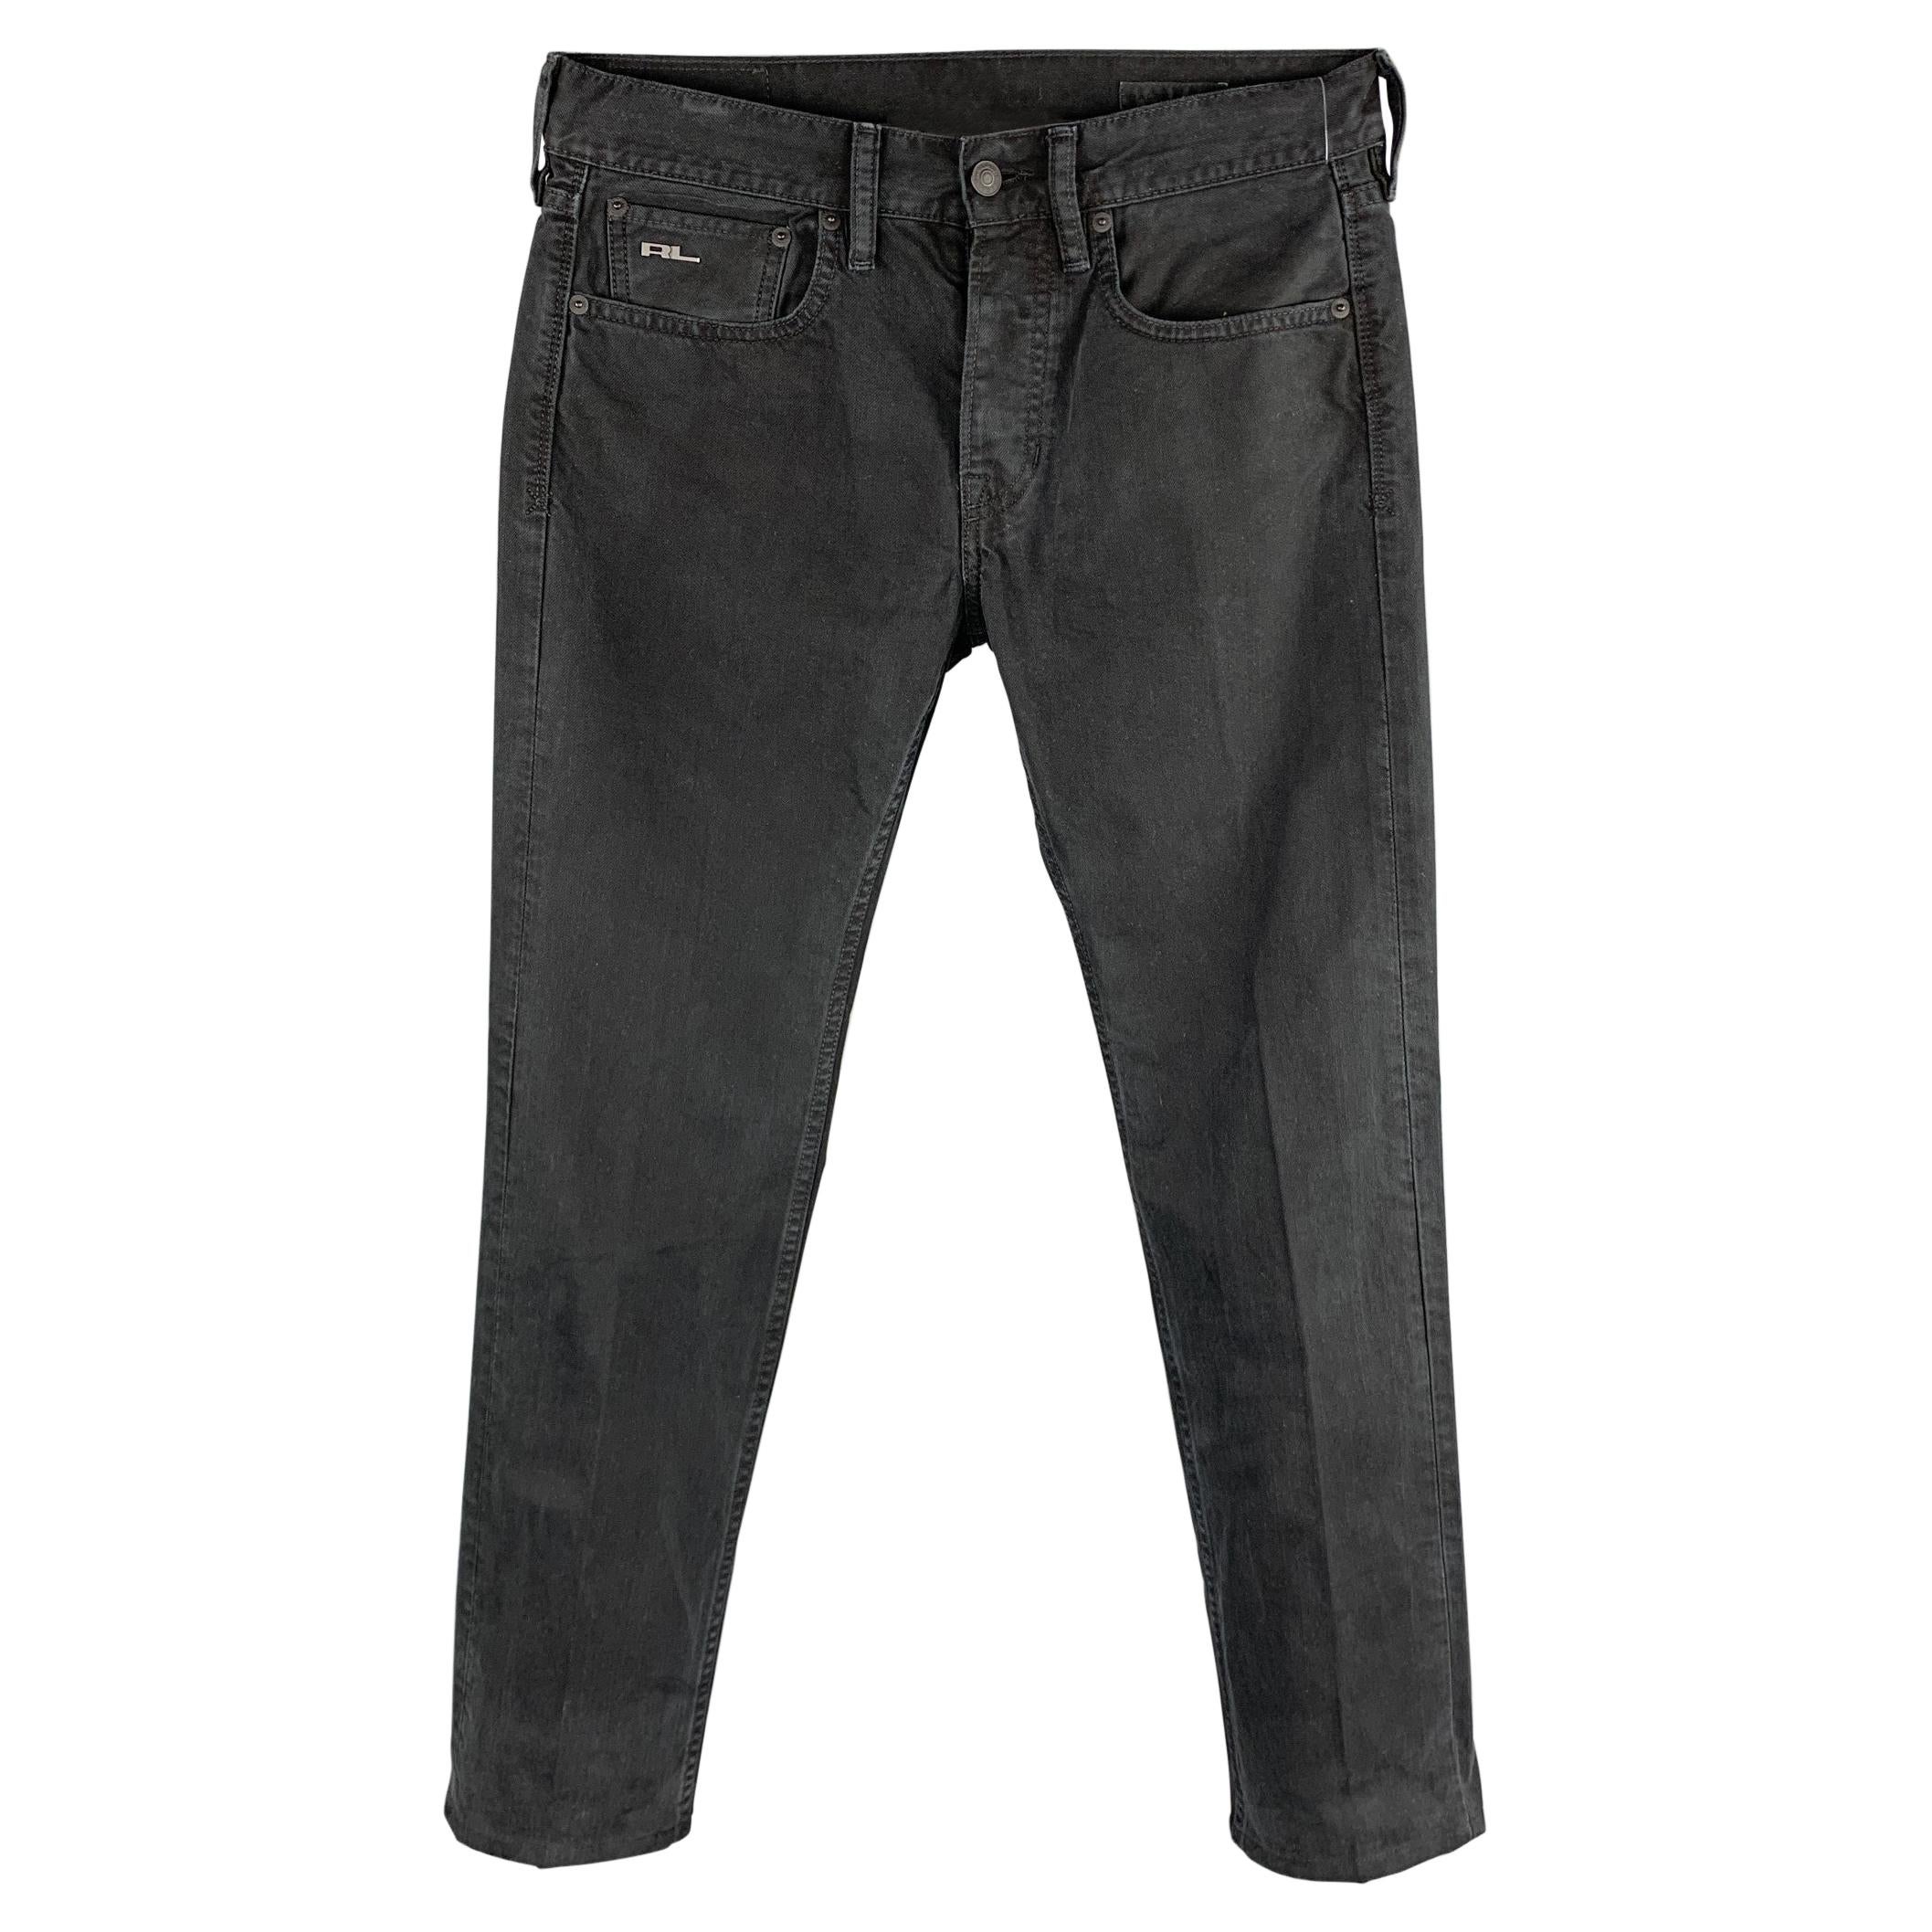 Ralph Lauren Gold Metallic Cotton Jeans Pants Size 28 For Sale at ...